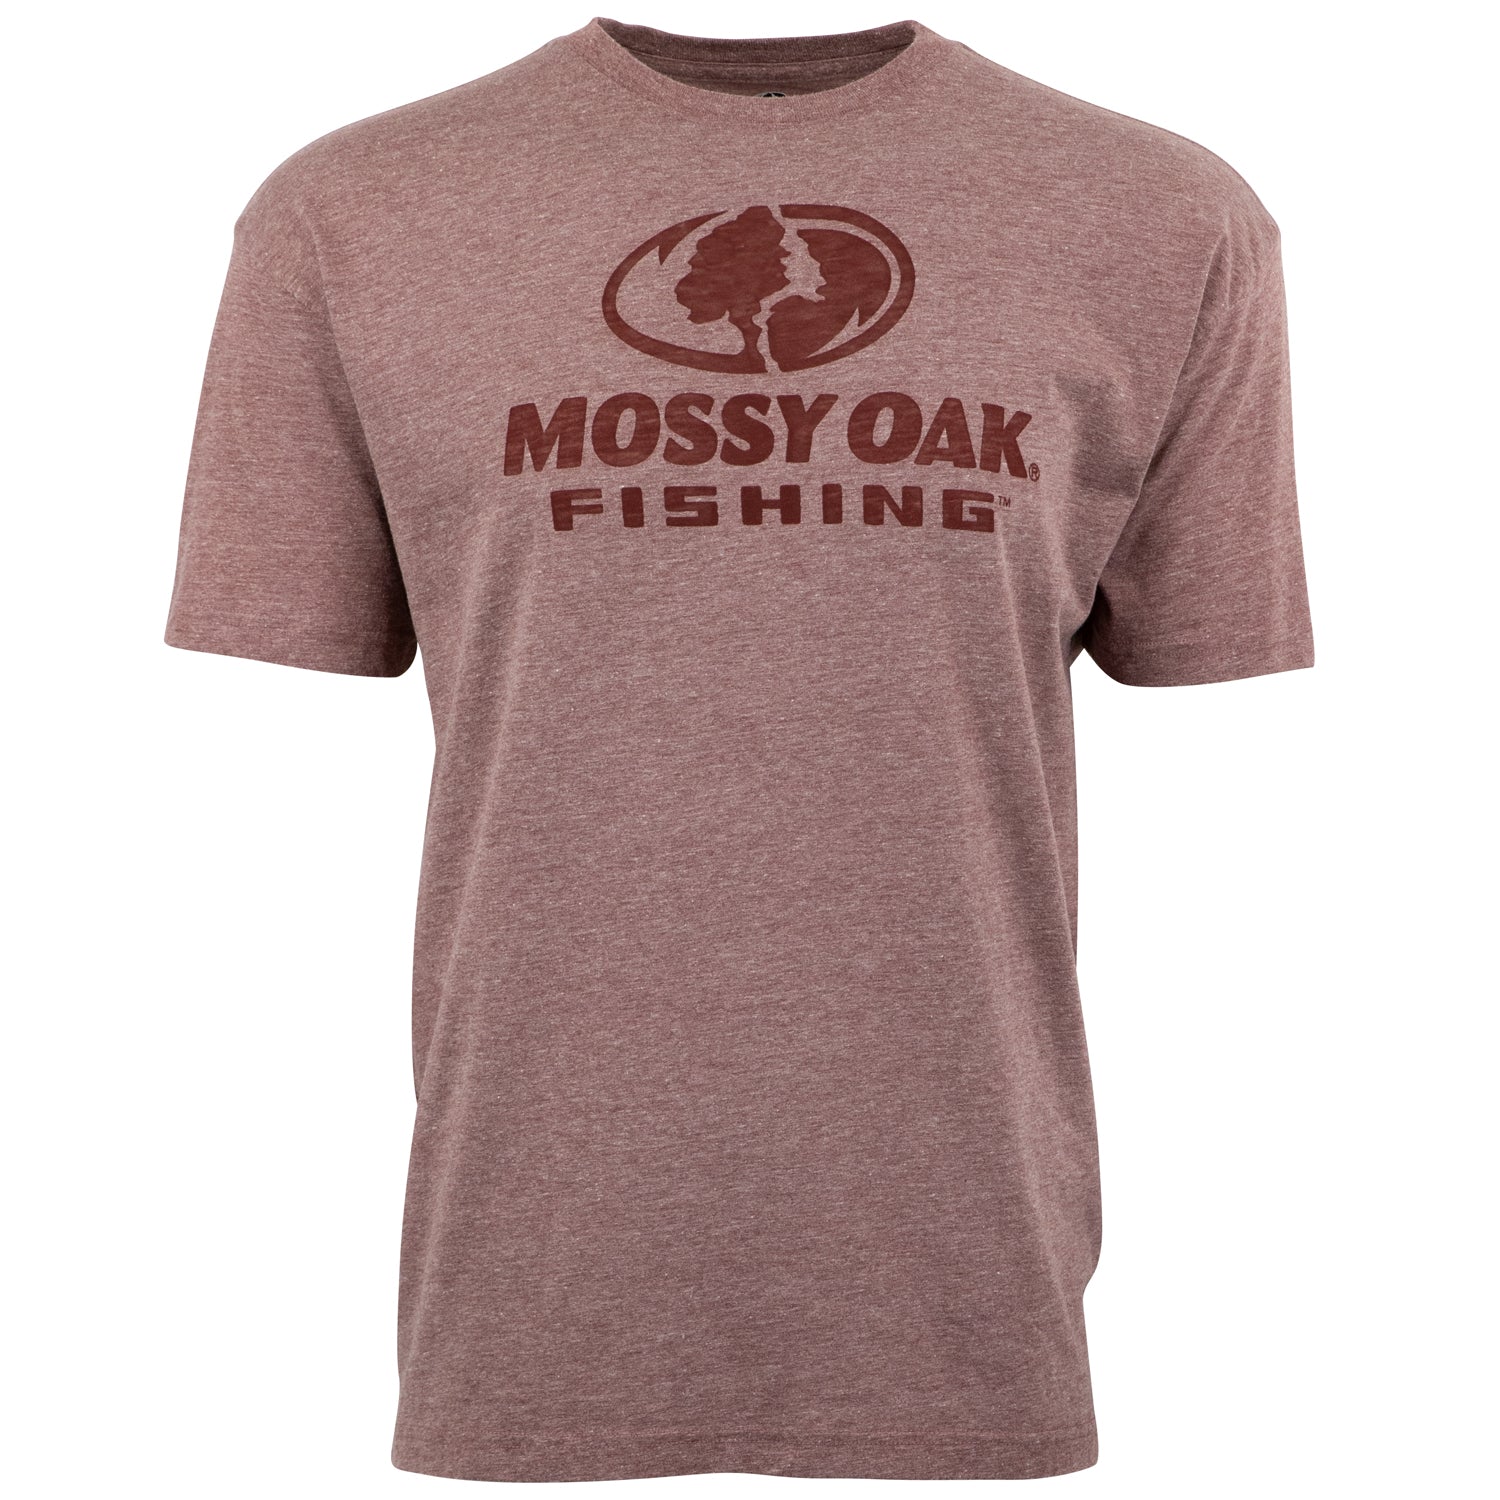 Mossy Oak Fishing Burnout Logo Tee